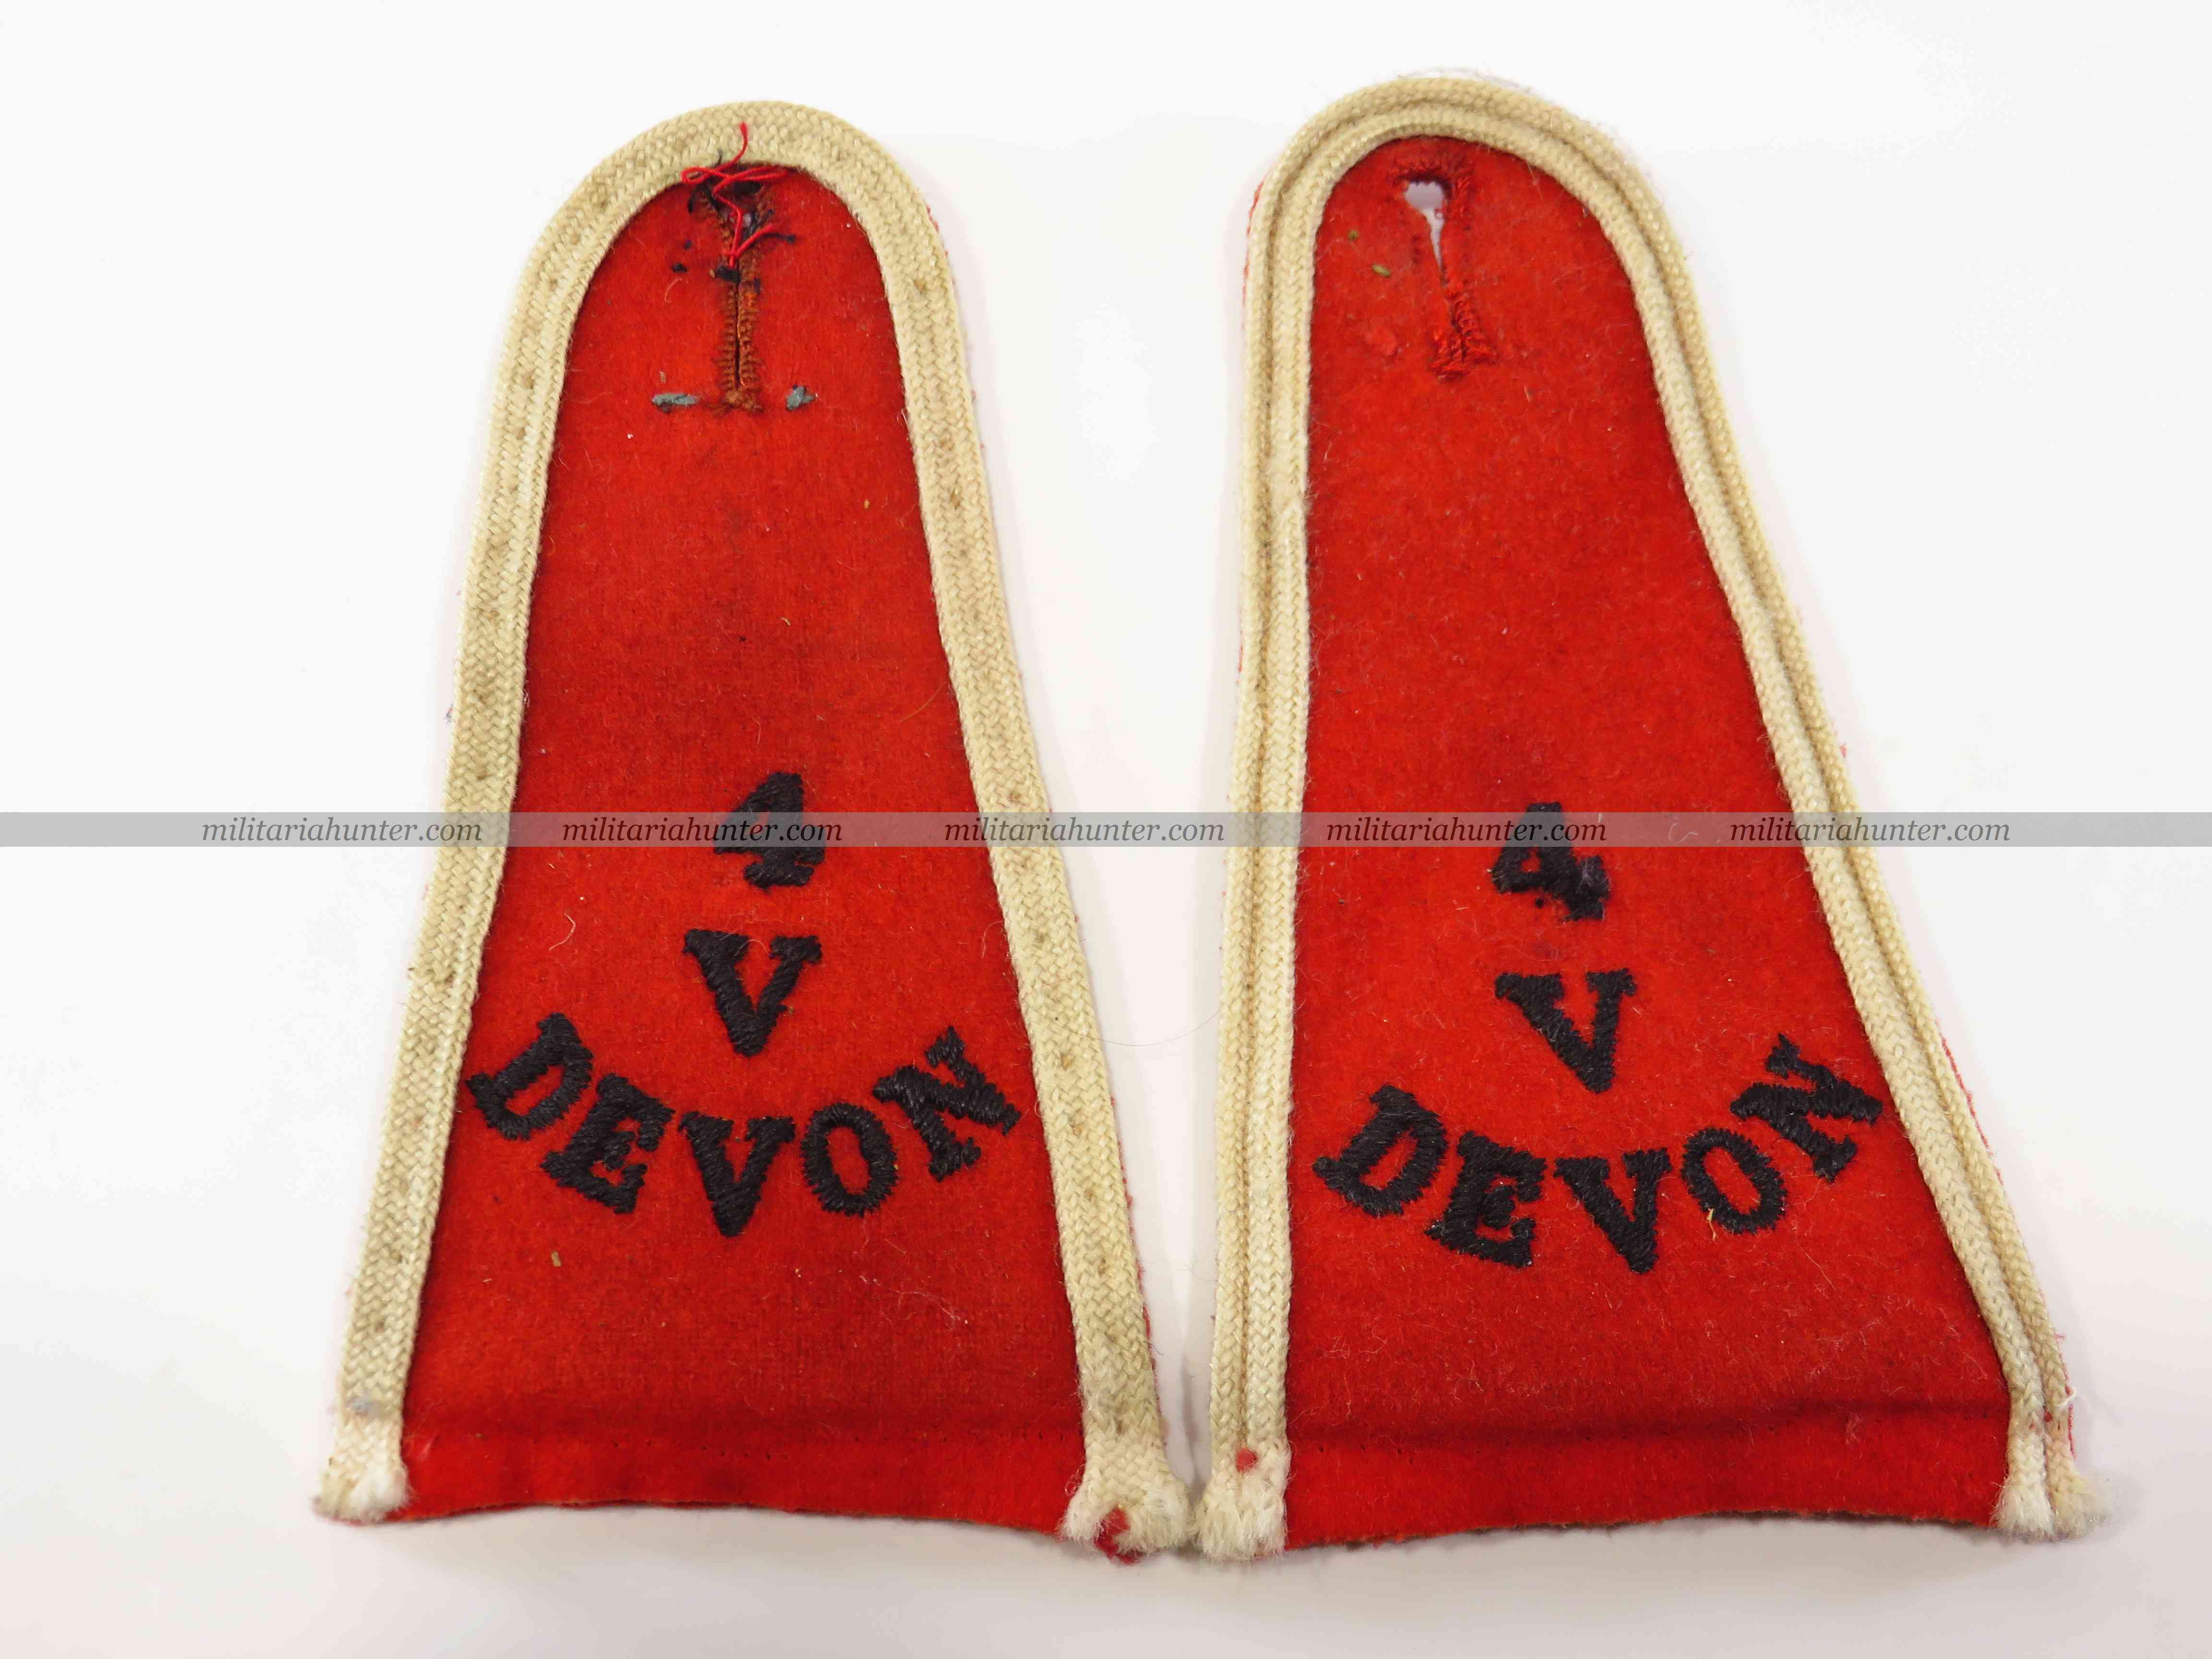 militaria : British pre-war red coat uniform shoulder boards pair 4th Devon's Volunteers